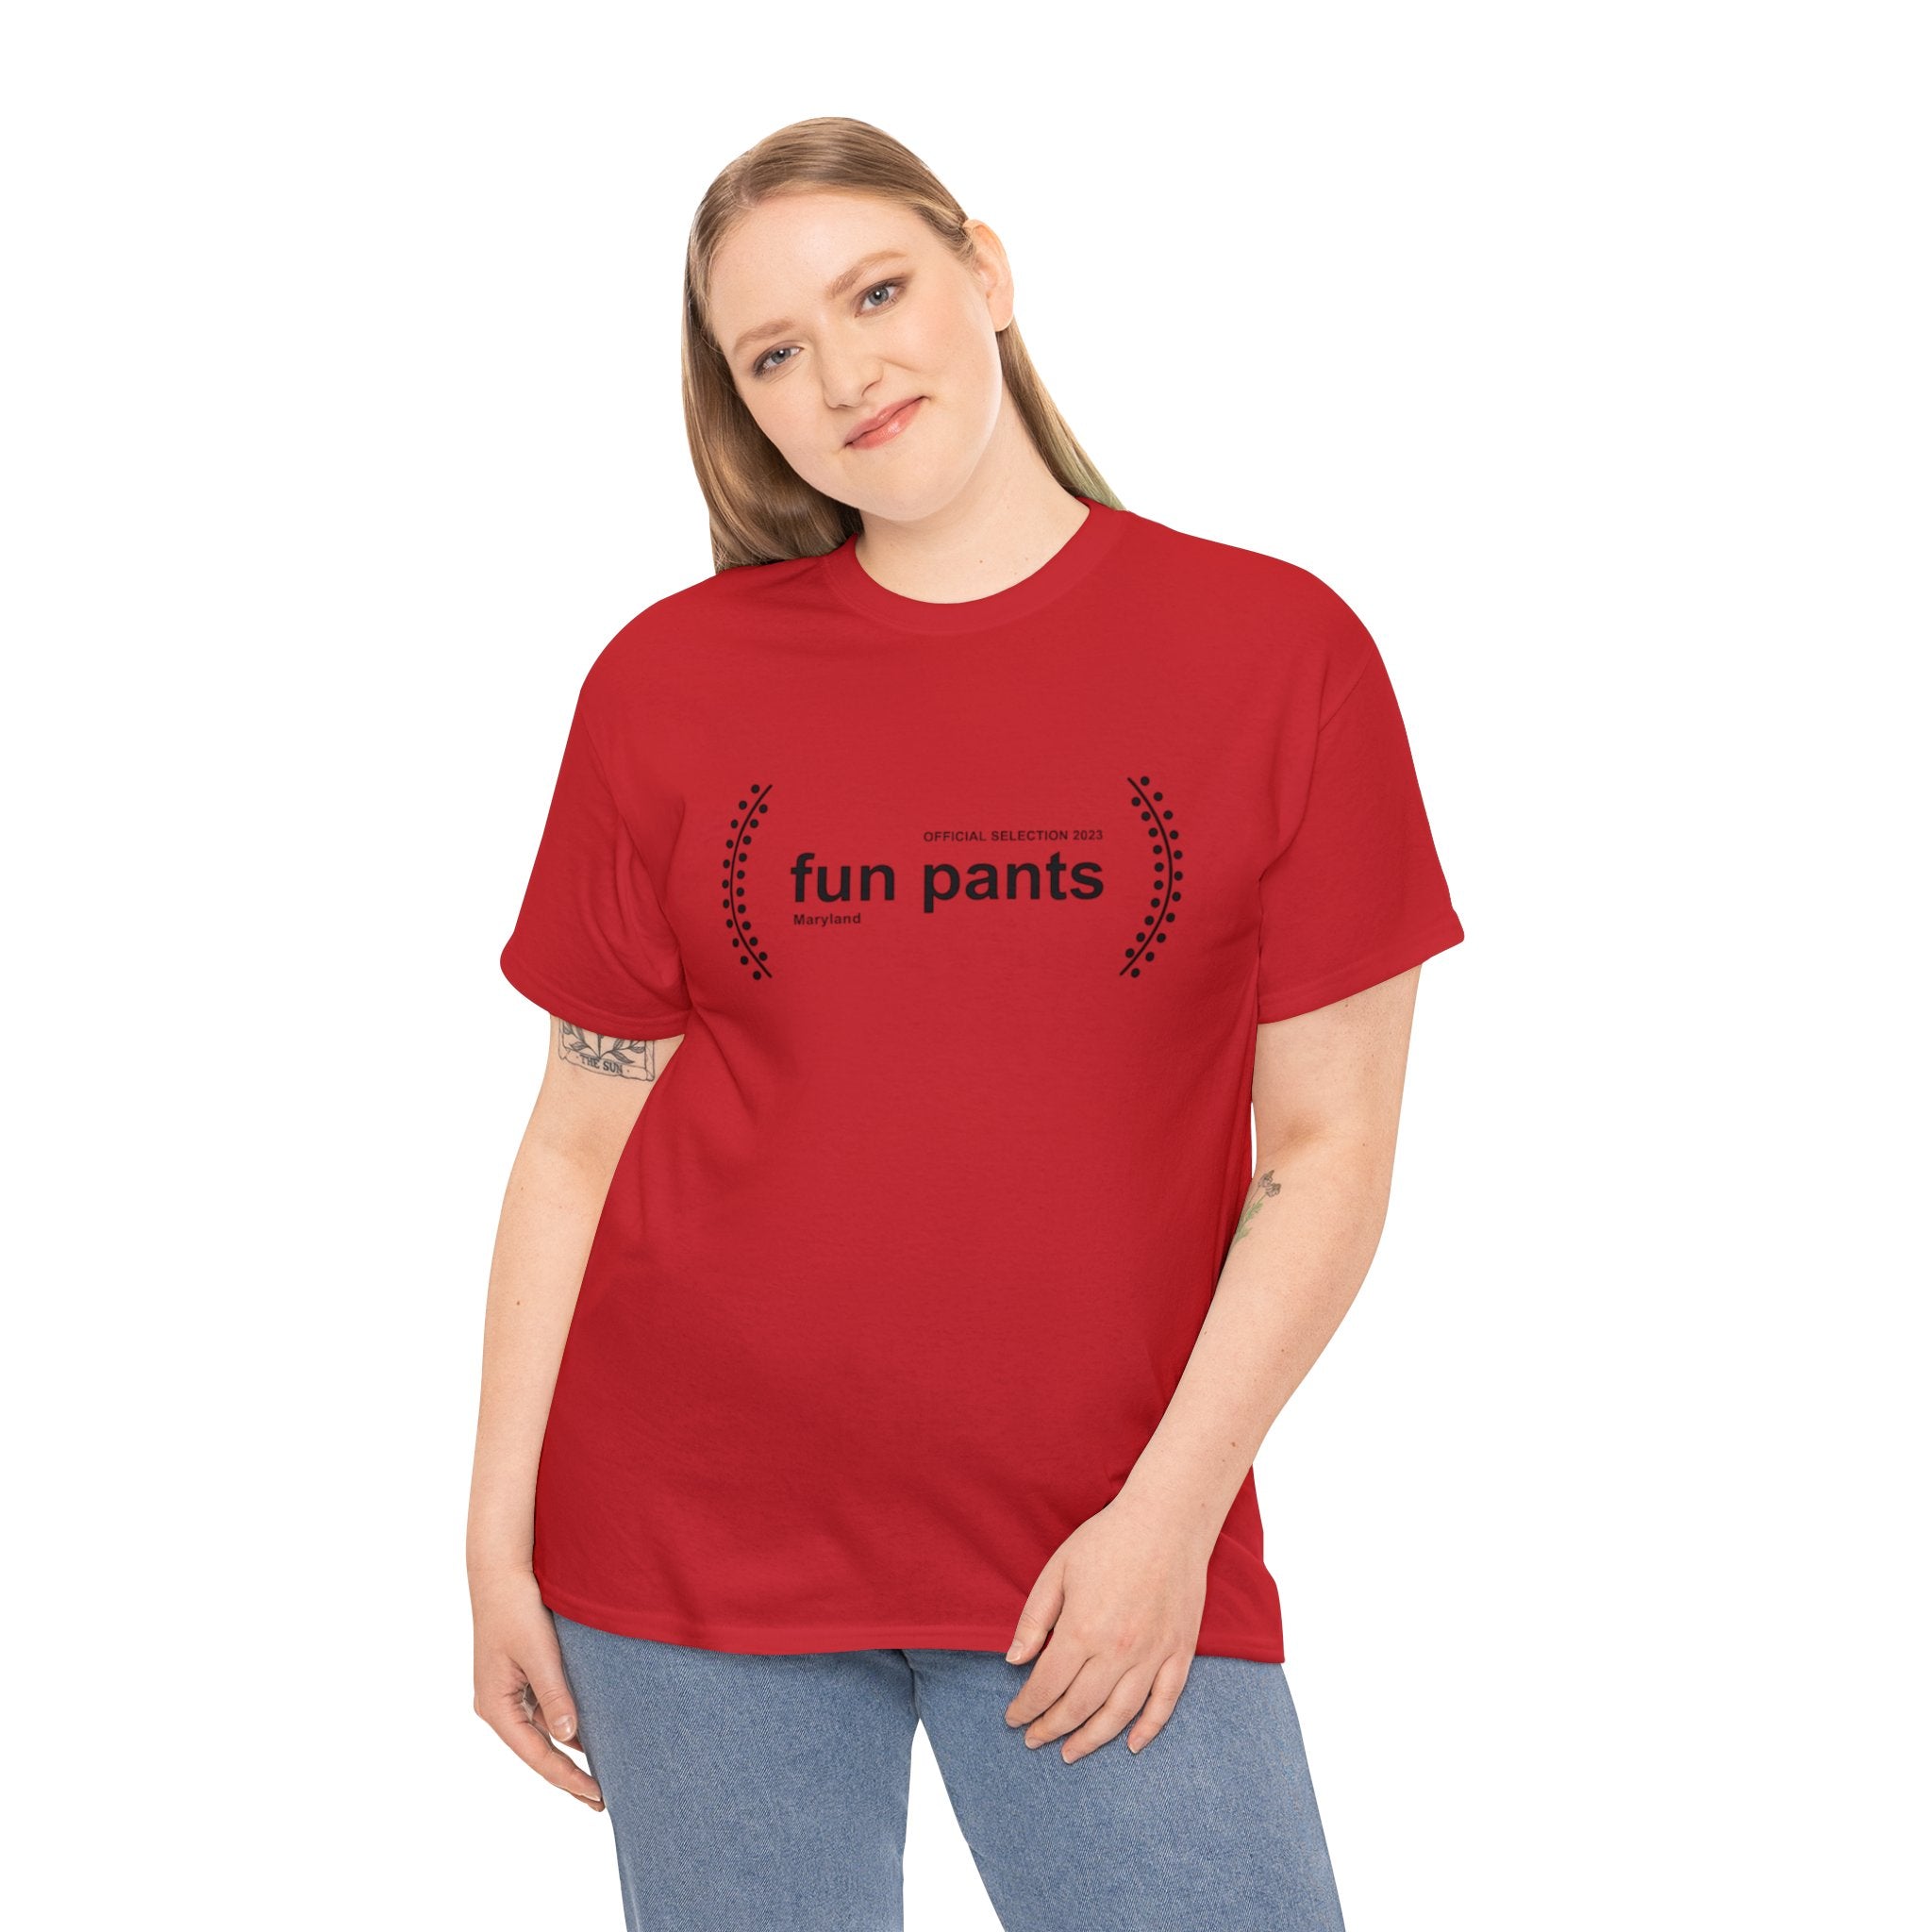 Fun pants T-Shirt